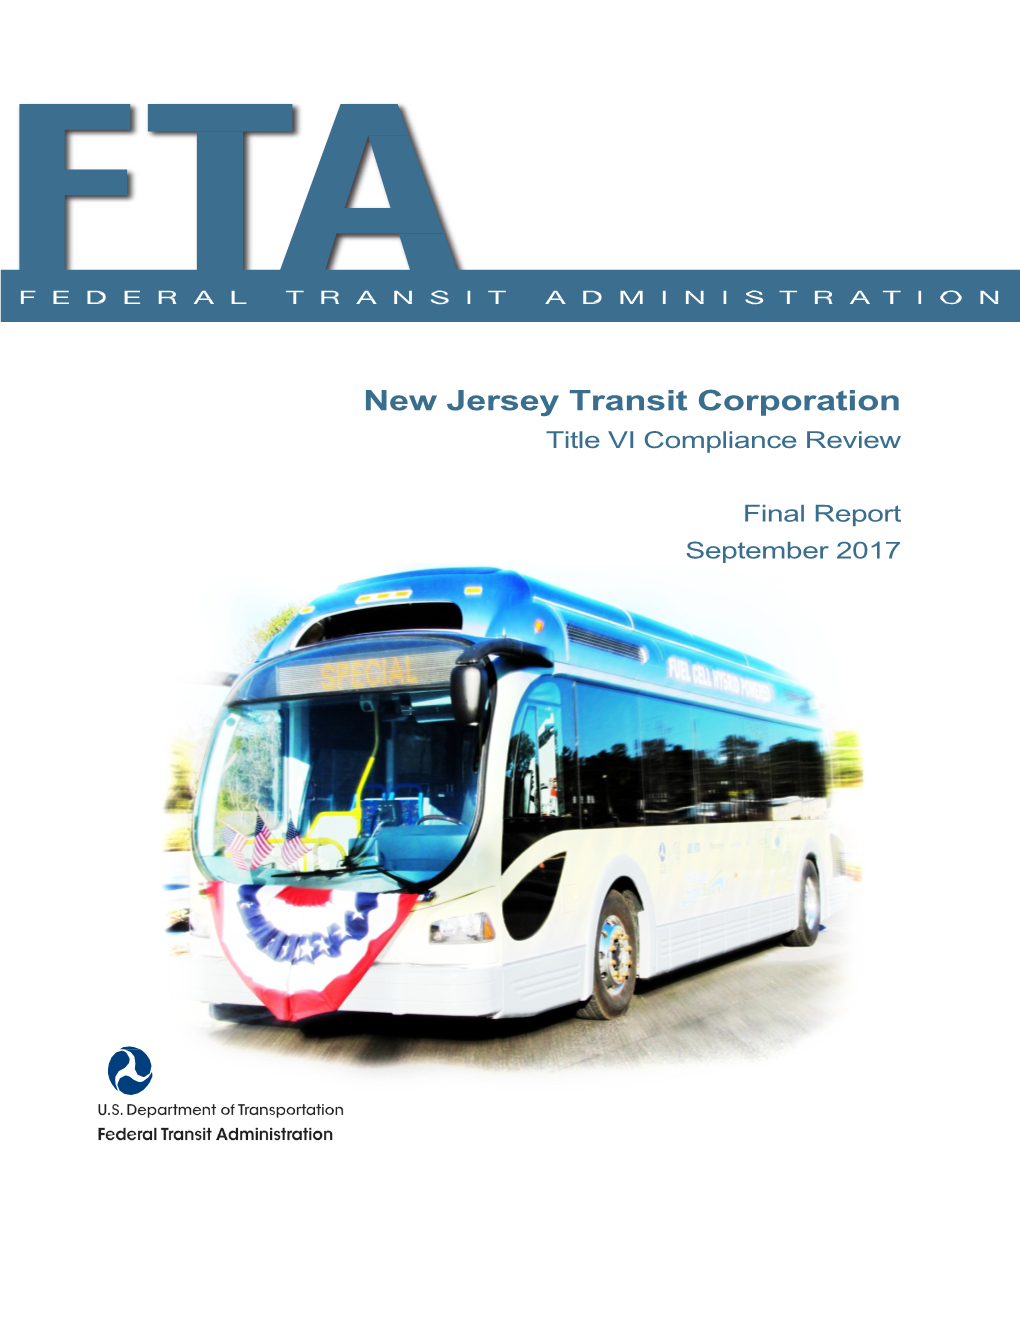 NJ Transit 2017 Title VI Review Final Report